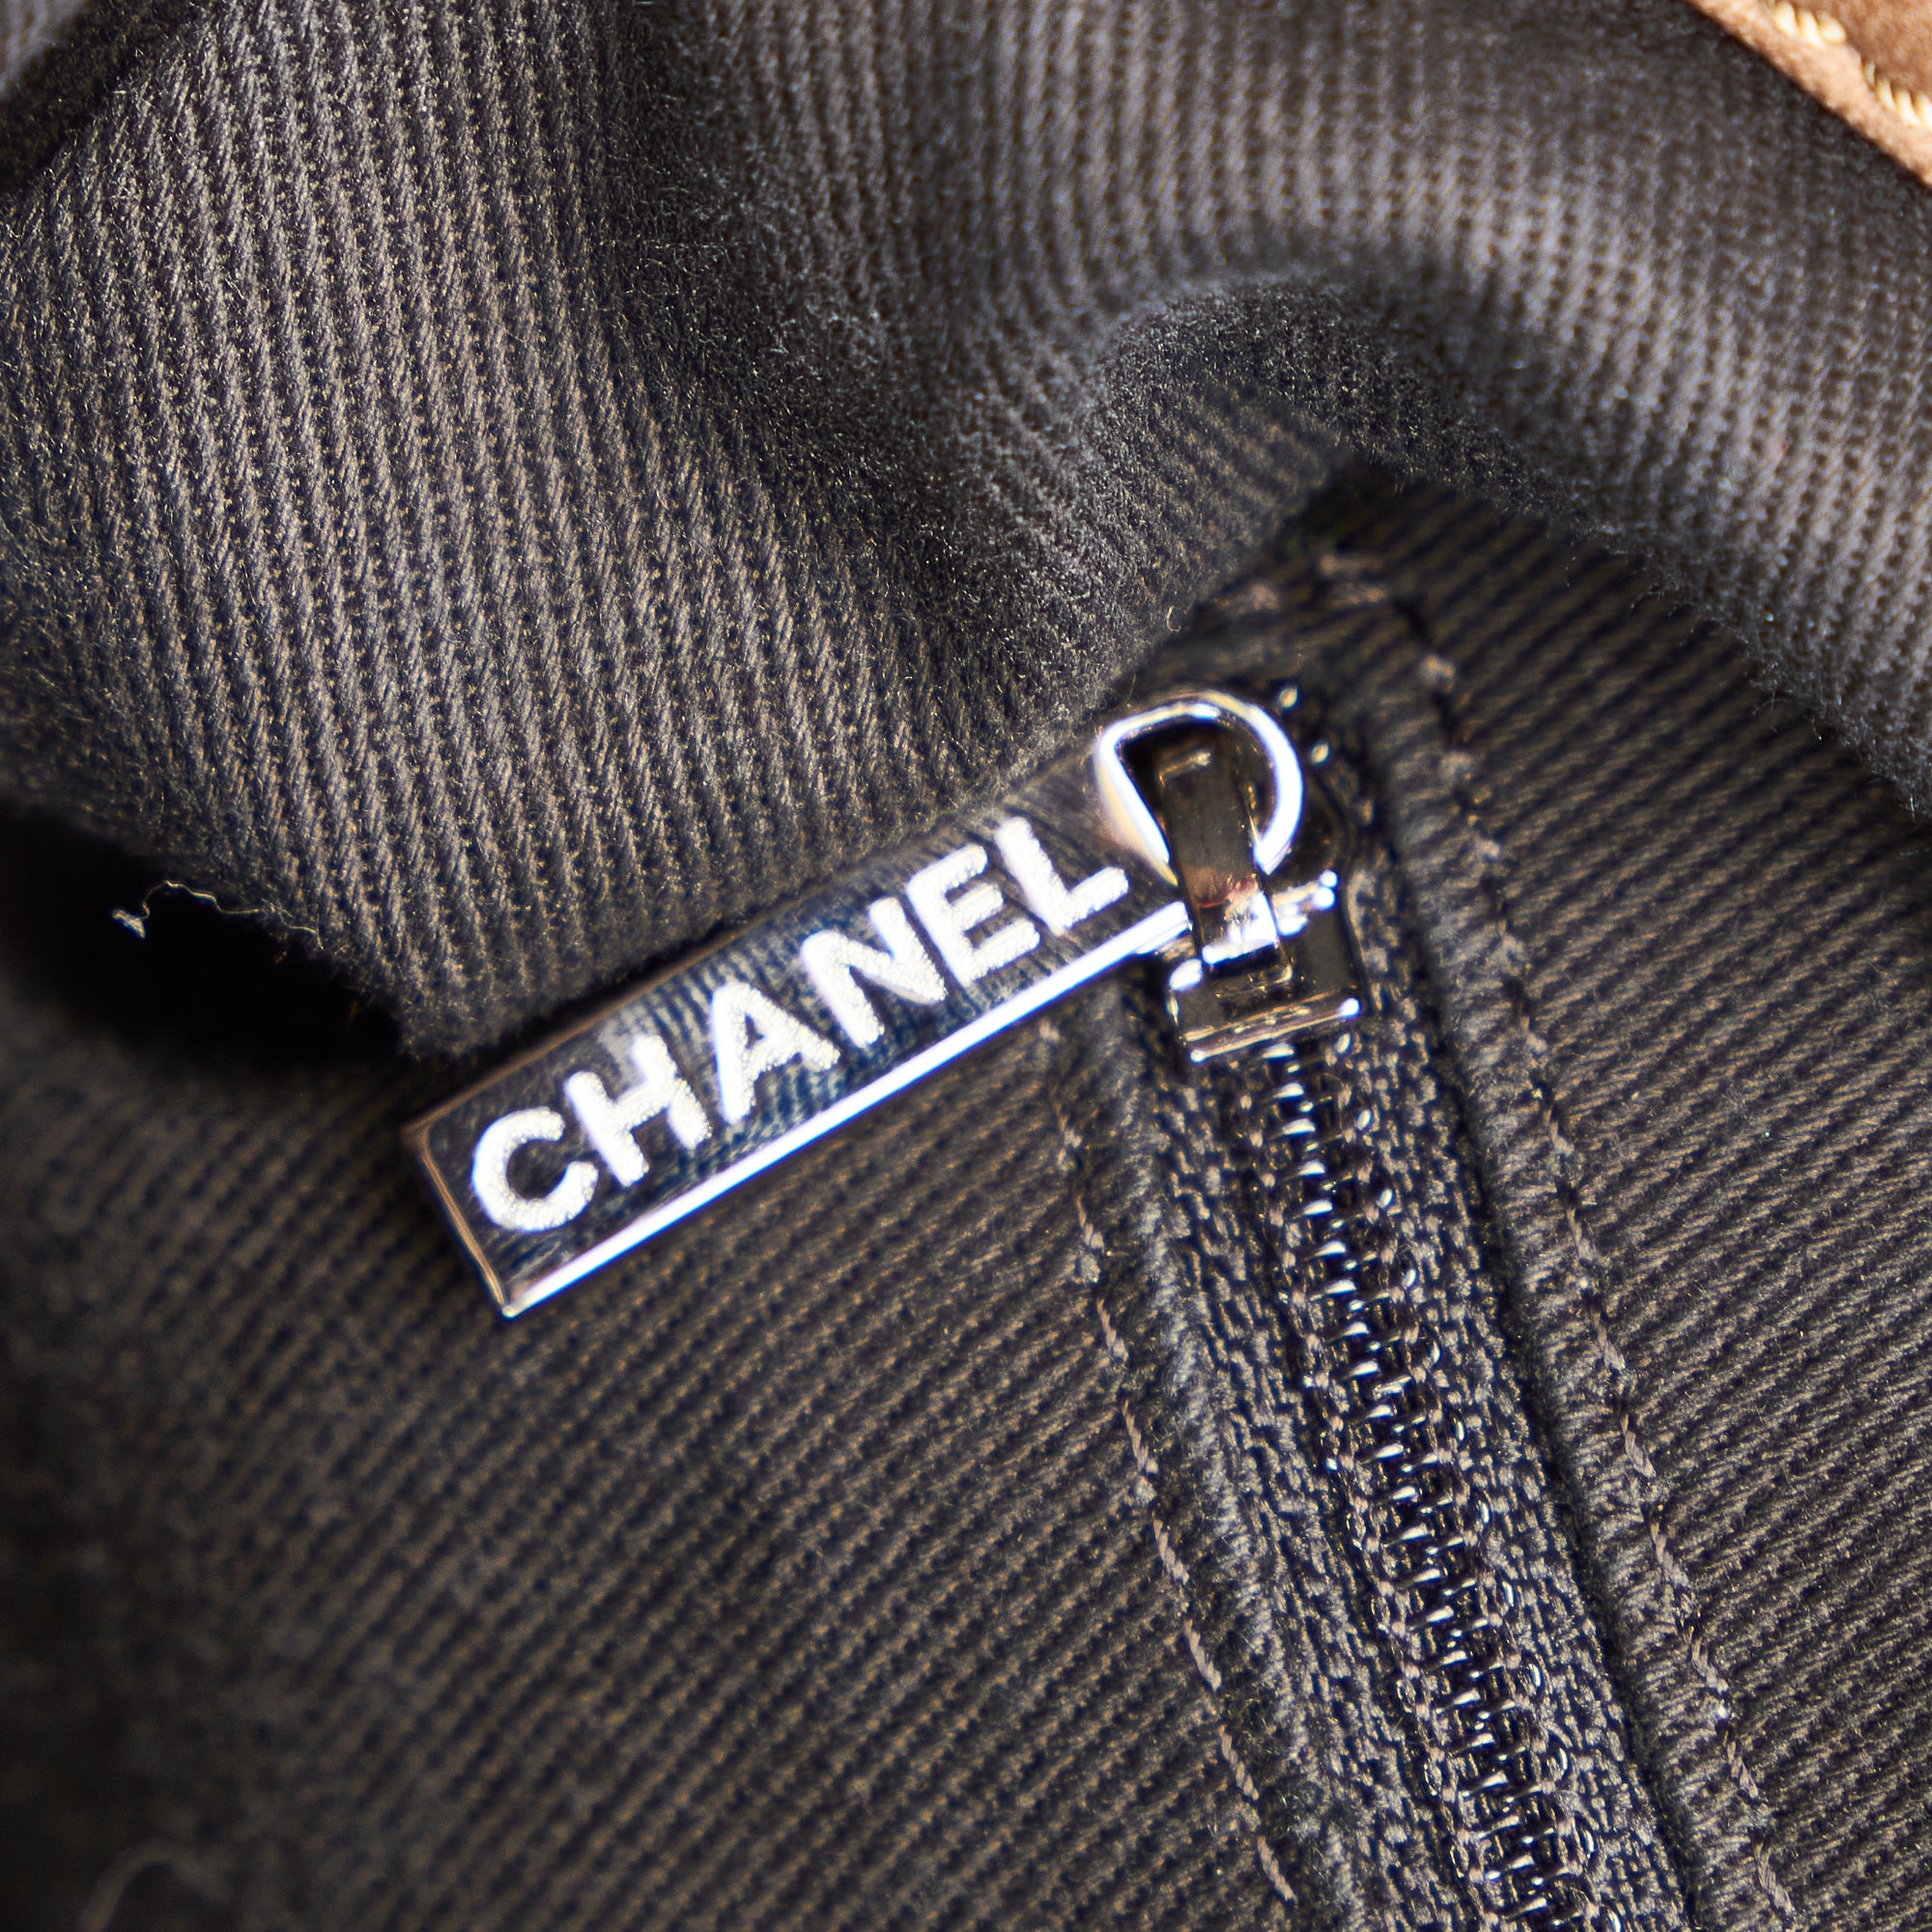 Brown Chanel Wild Stitch Lambskin Leather Shoulder Bag